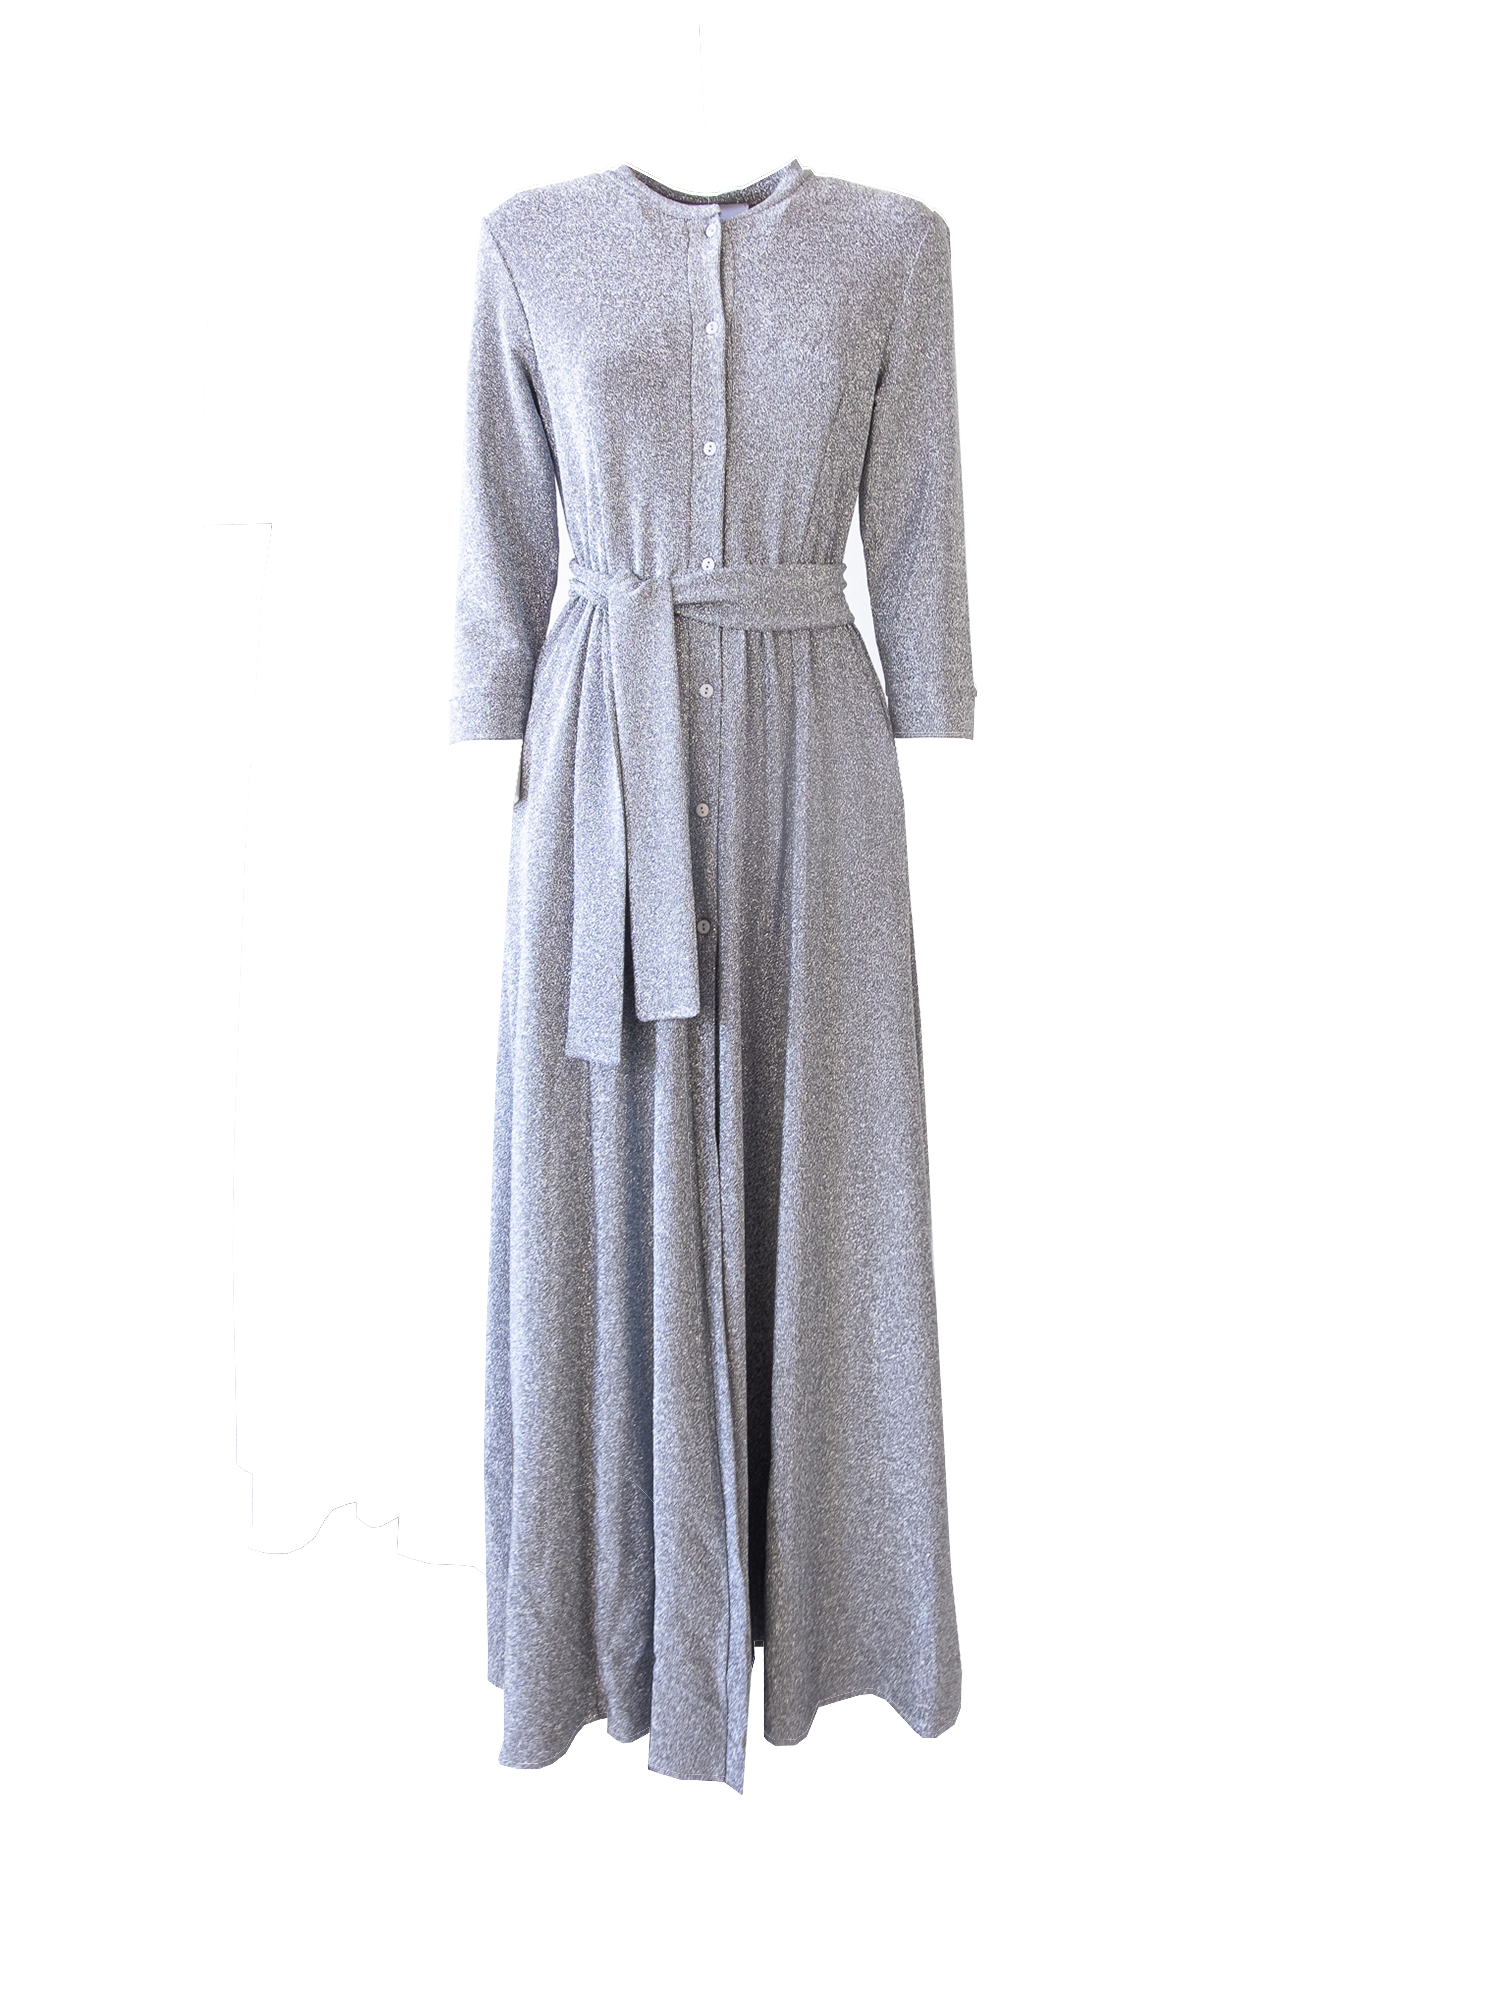 CLELIA - long silver lurex shirt dress